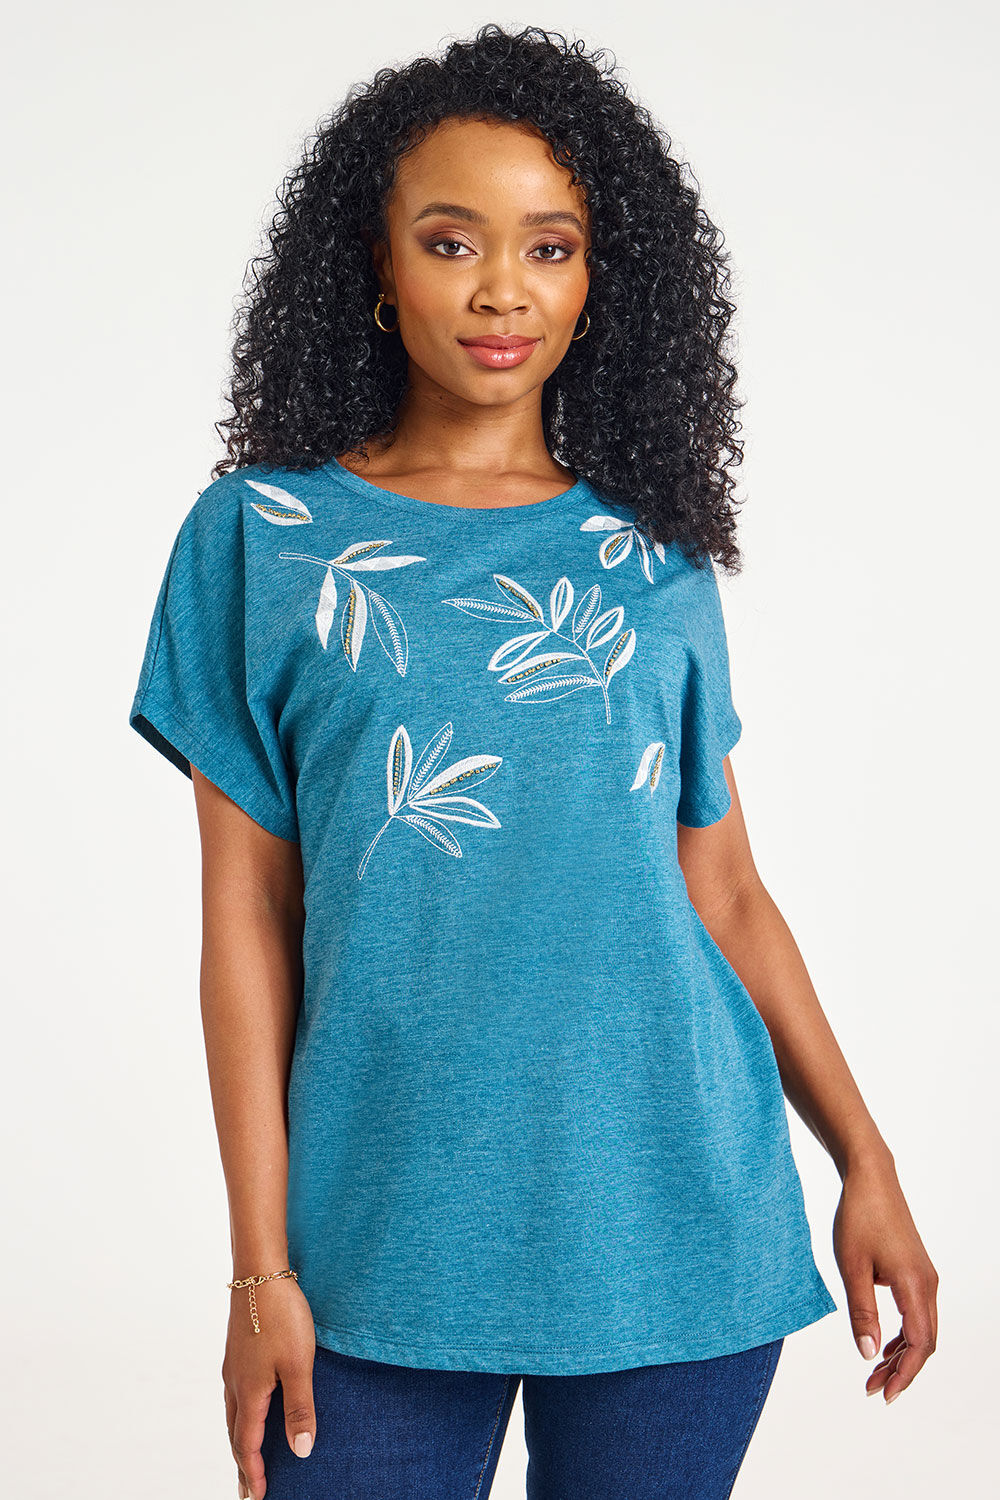 Bonmarche Teal Short Sleeve Embroidered Beaded Leaf Design T-Shirt, Size: 14